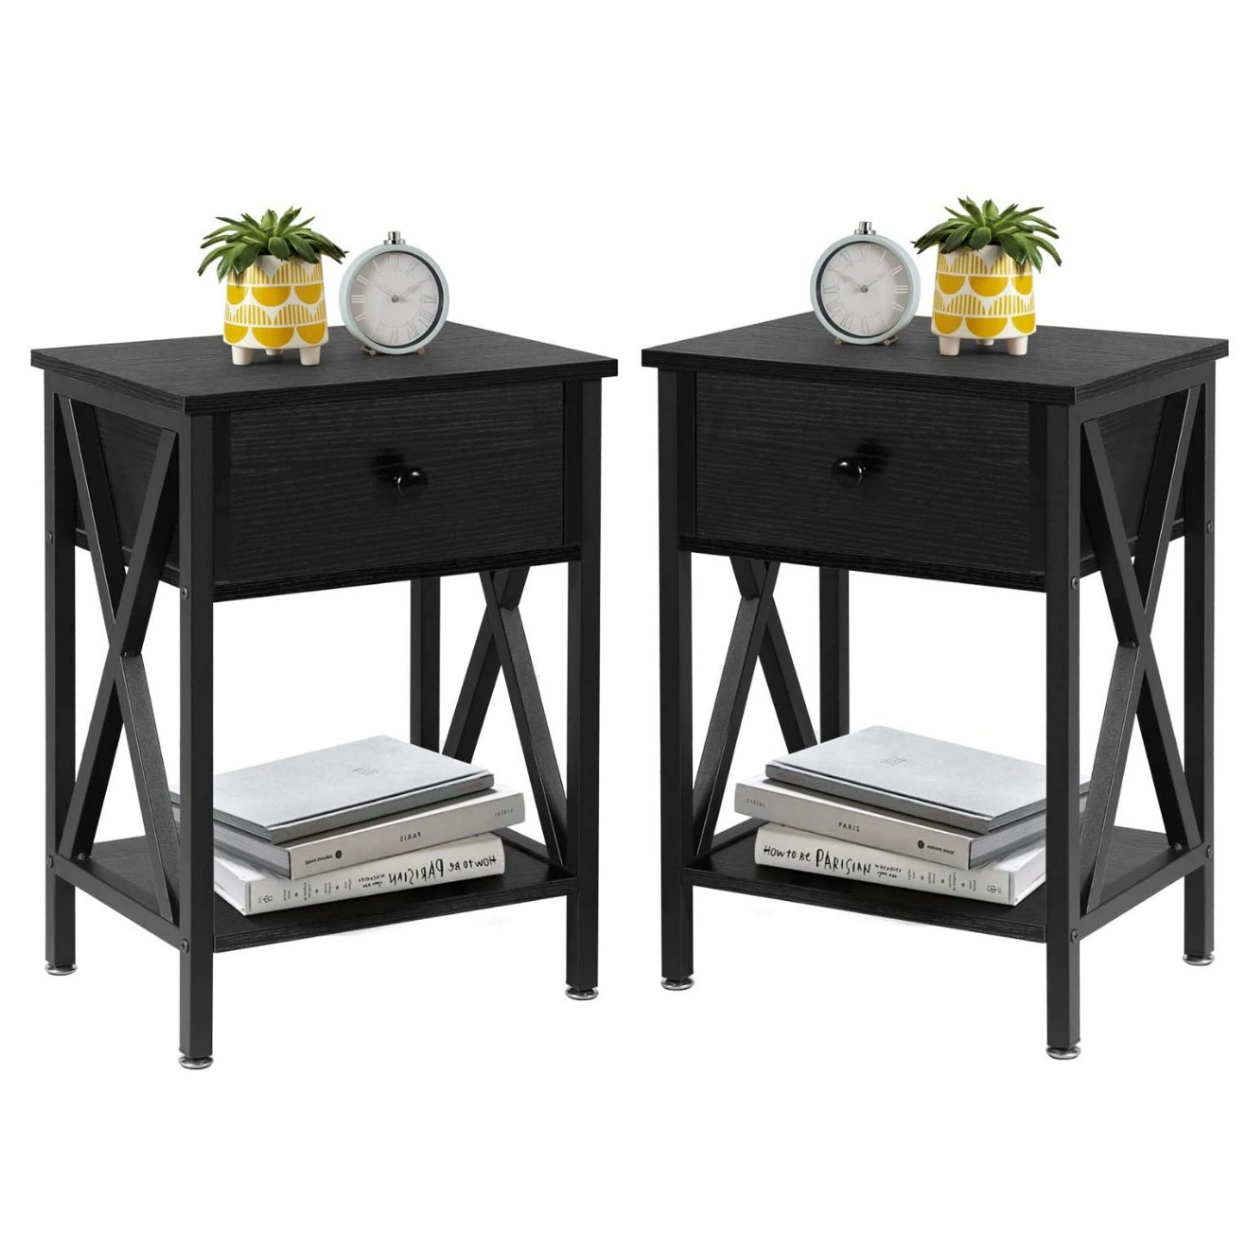 Side Tables Design Side End Table Night Stand Storage Shelf with Bin Drawer for Living Room Set of 2 (Black)